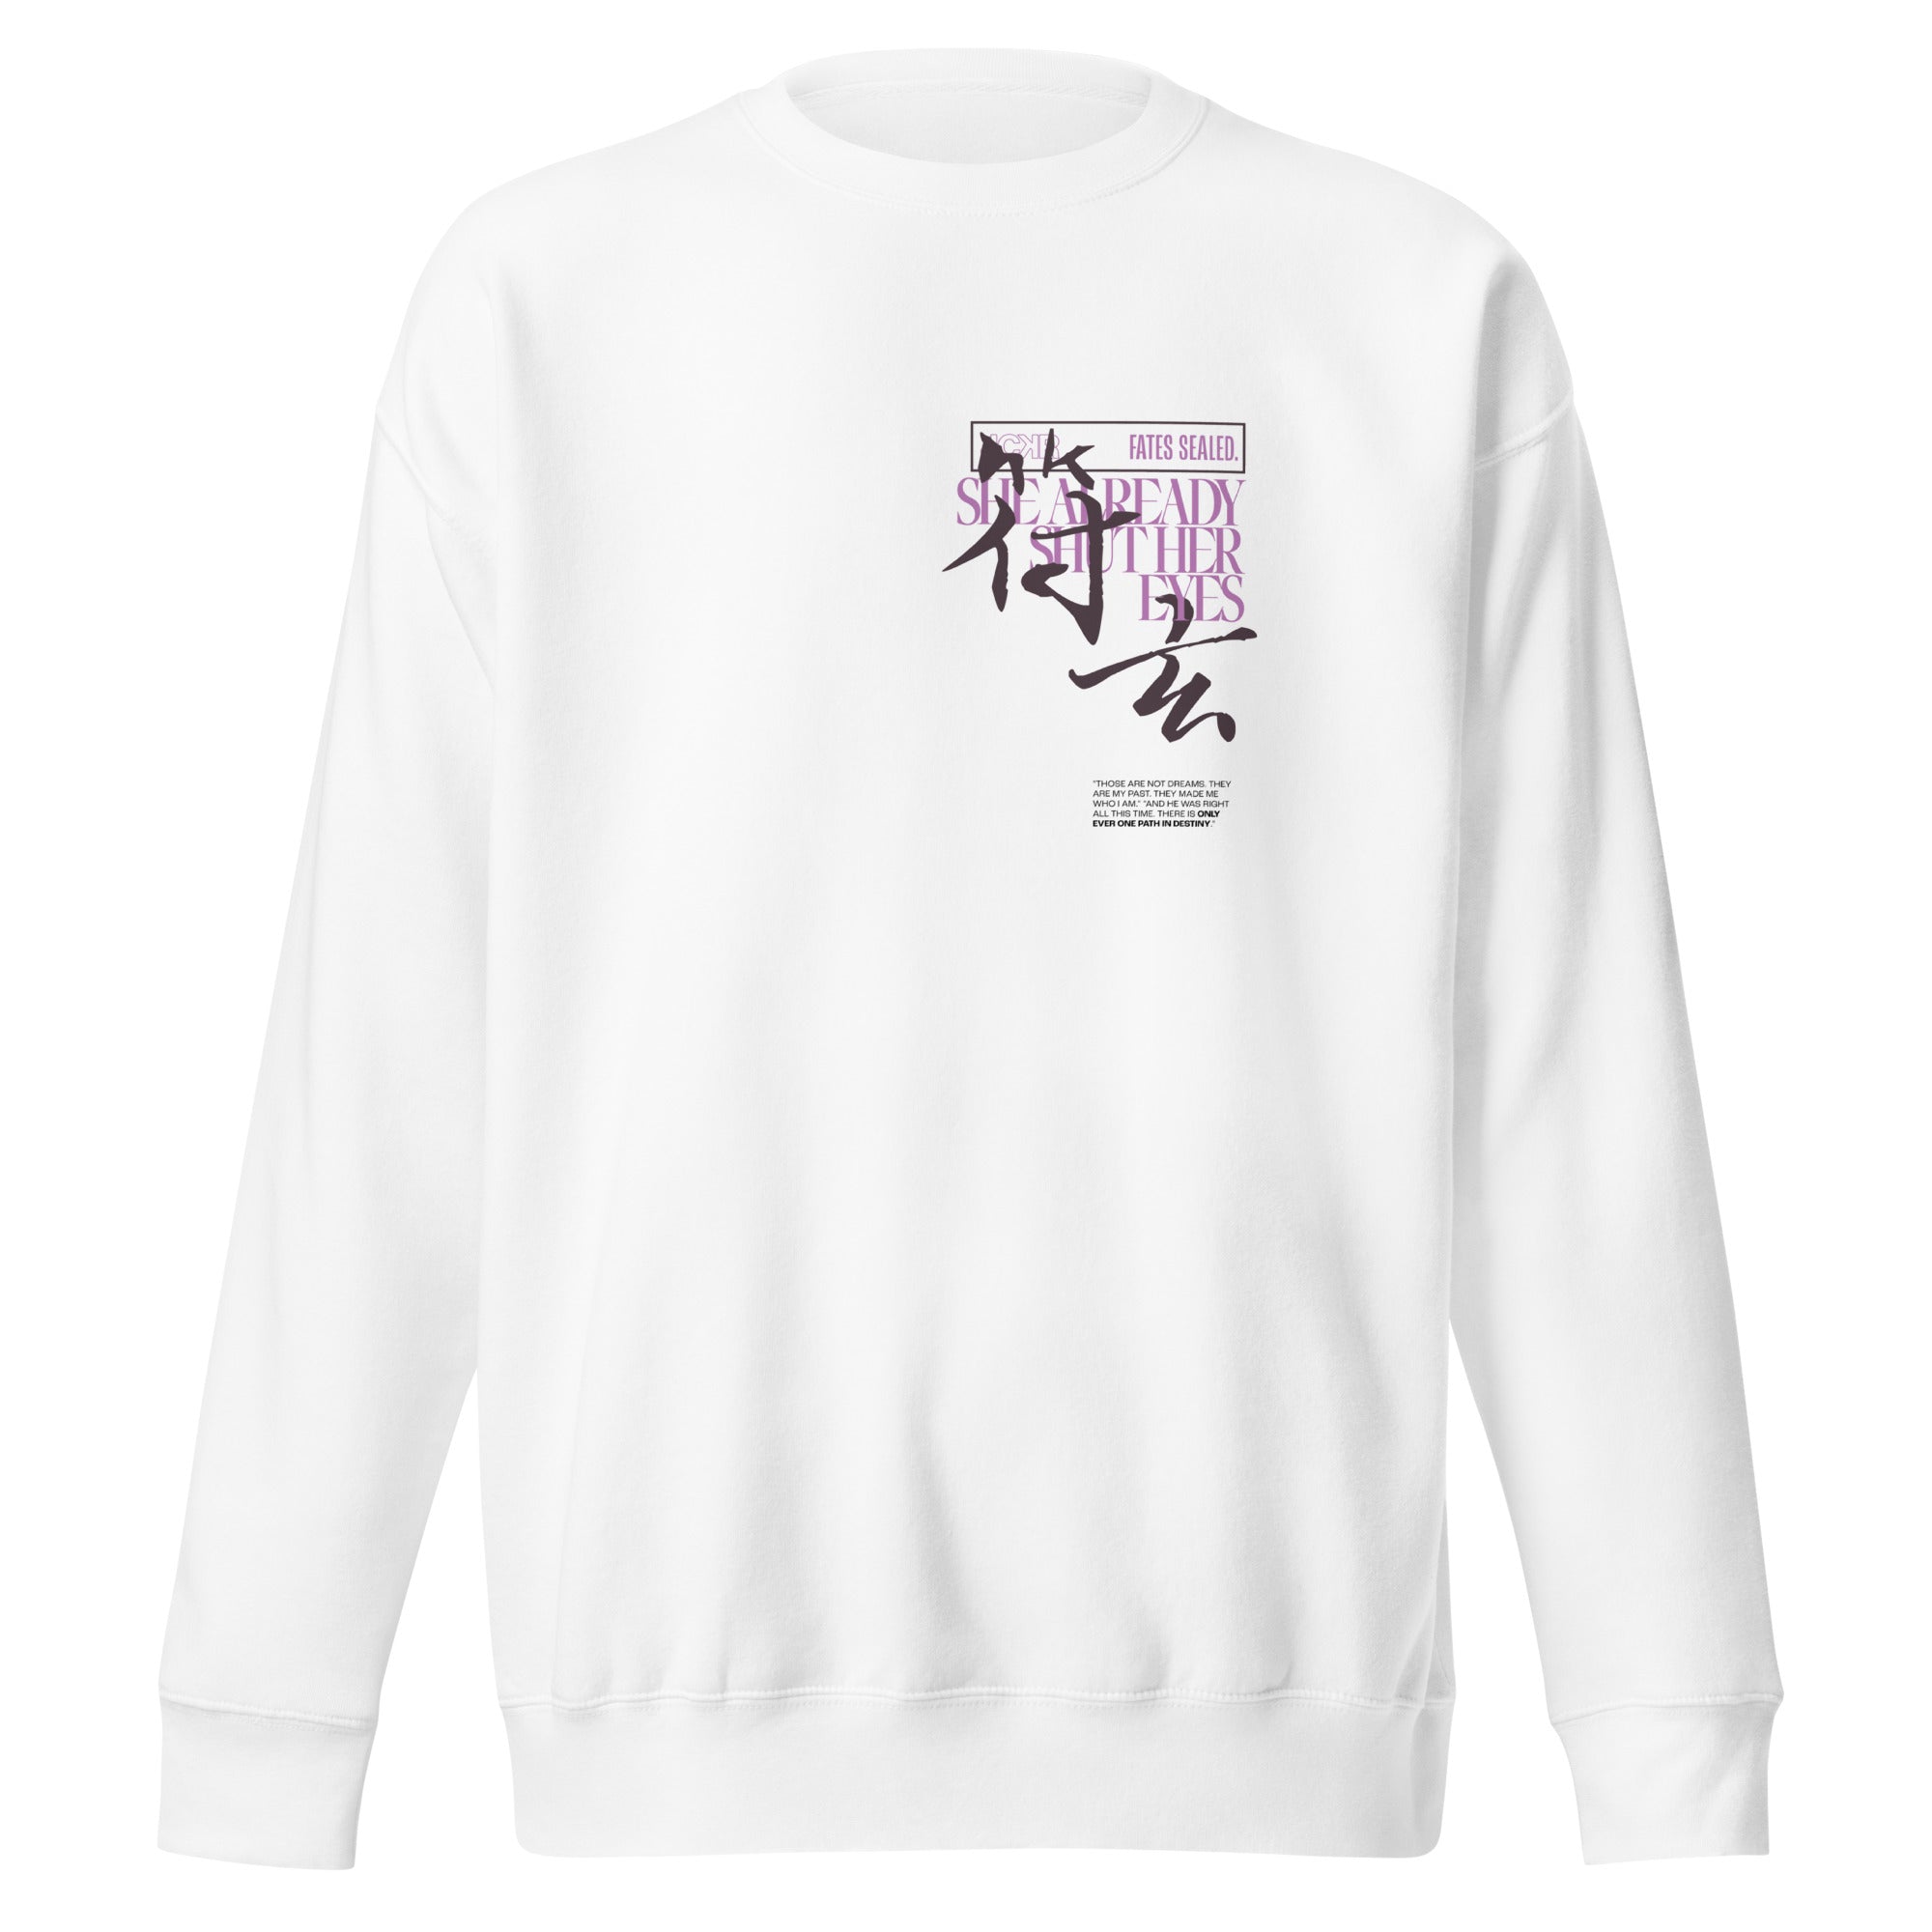 EYES CLOSED • sweatshirt - Jackler - anime-inspired streetwear - anime clothing